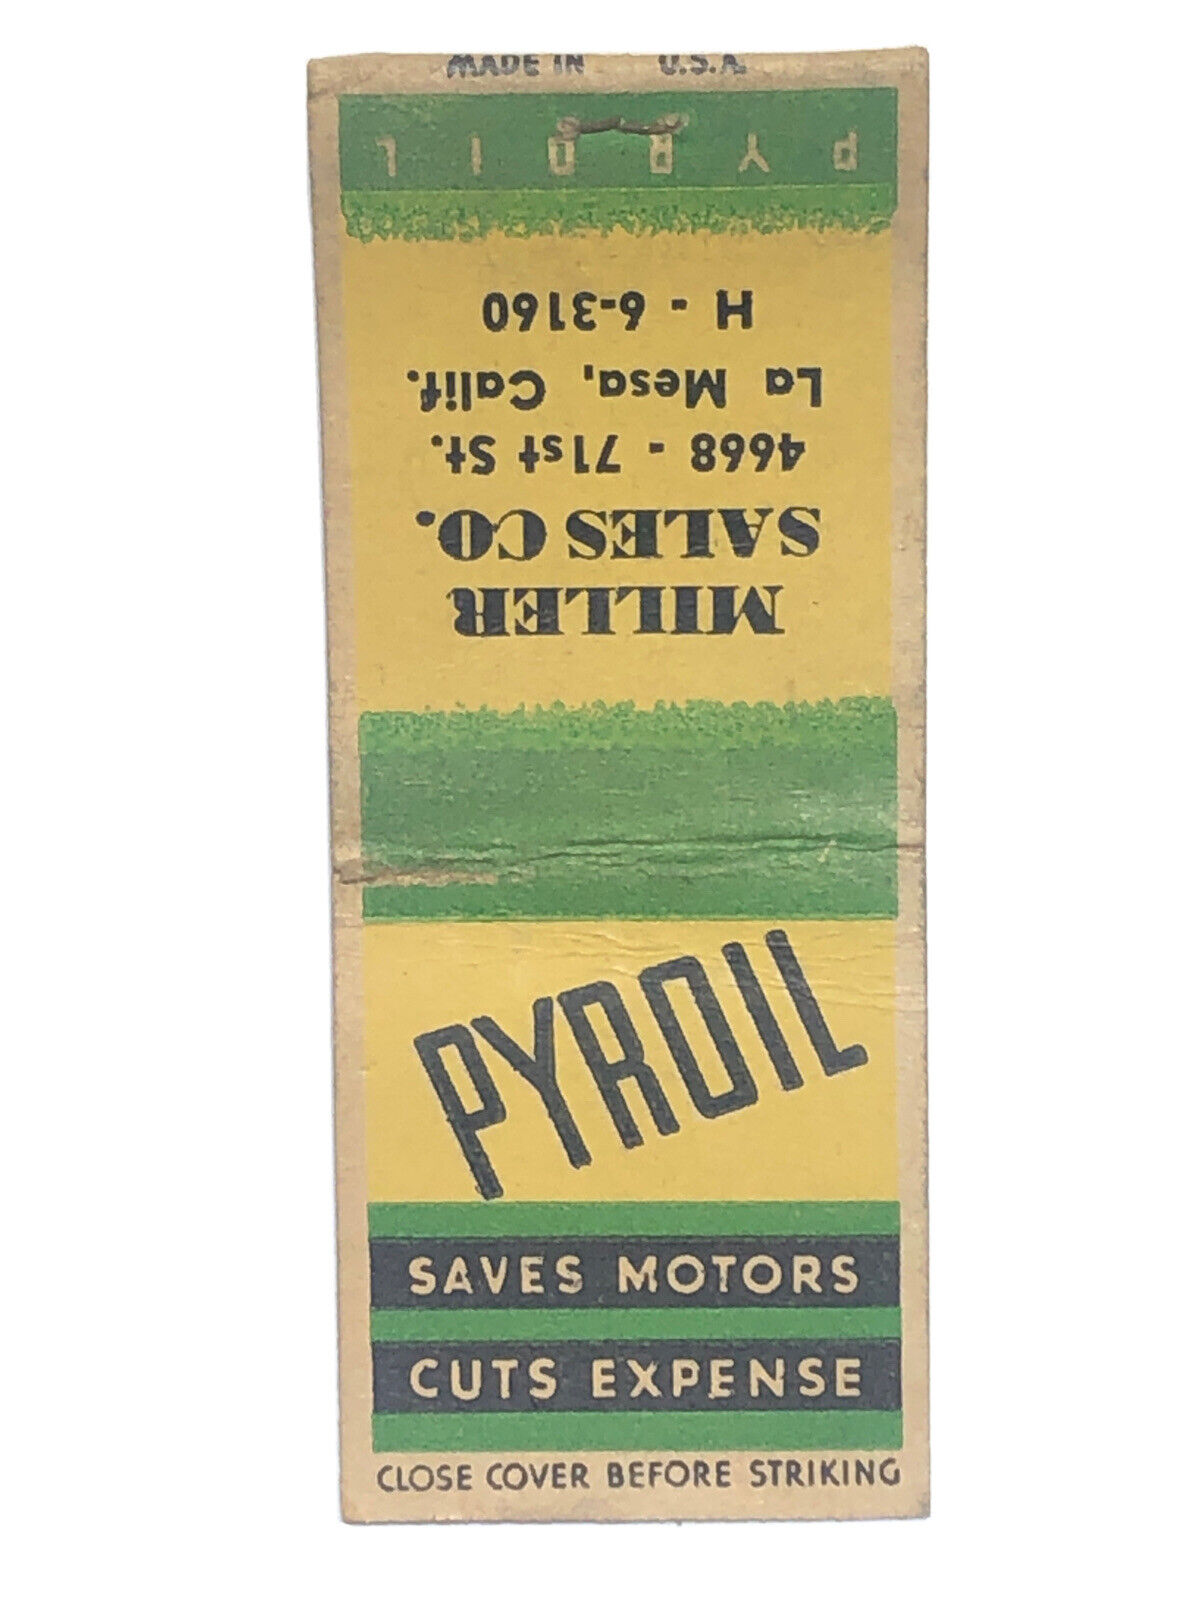 Pyroil Motor Oil La Mesa California Vintage 50s Auto Matchbook Cover Matchbox